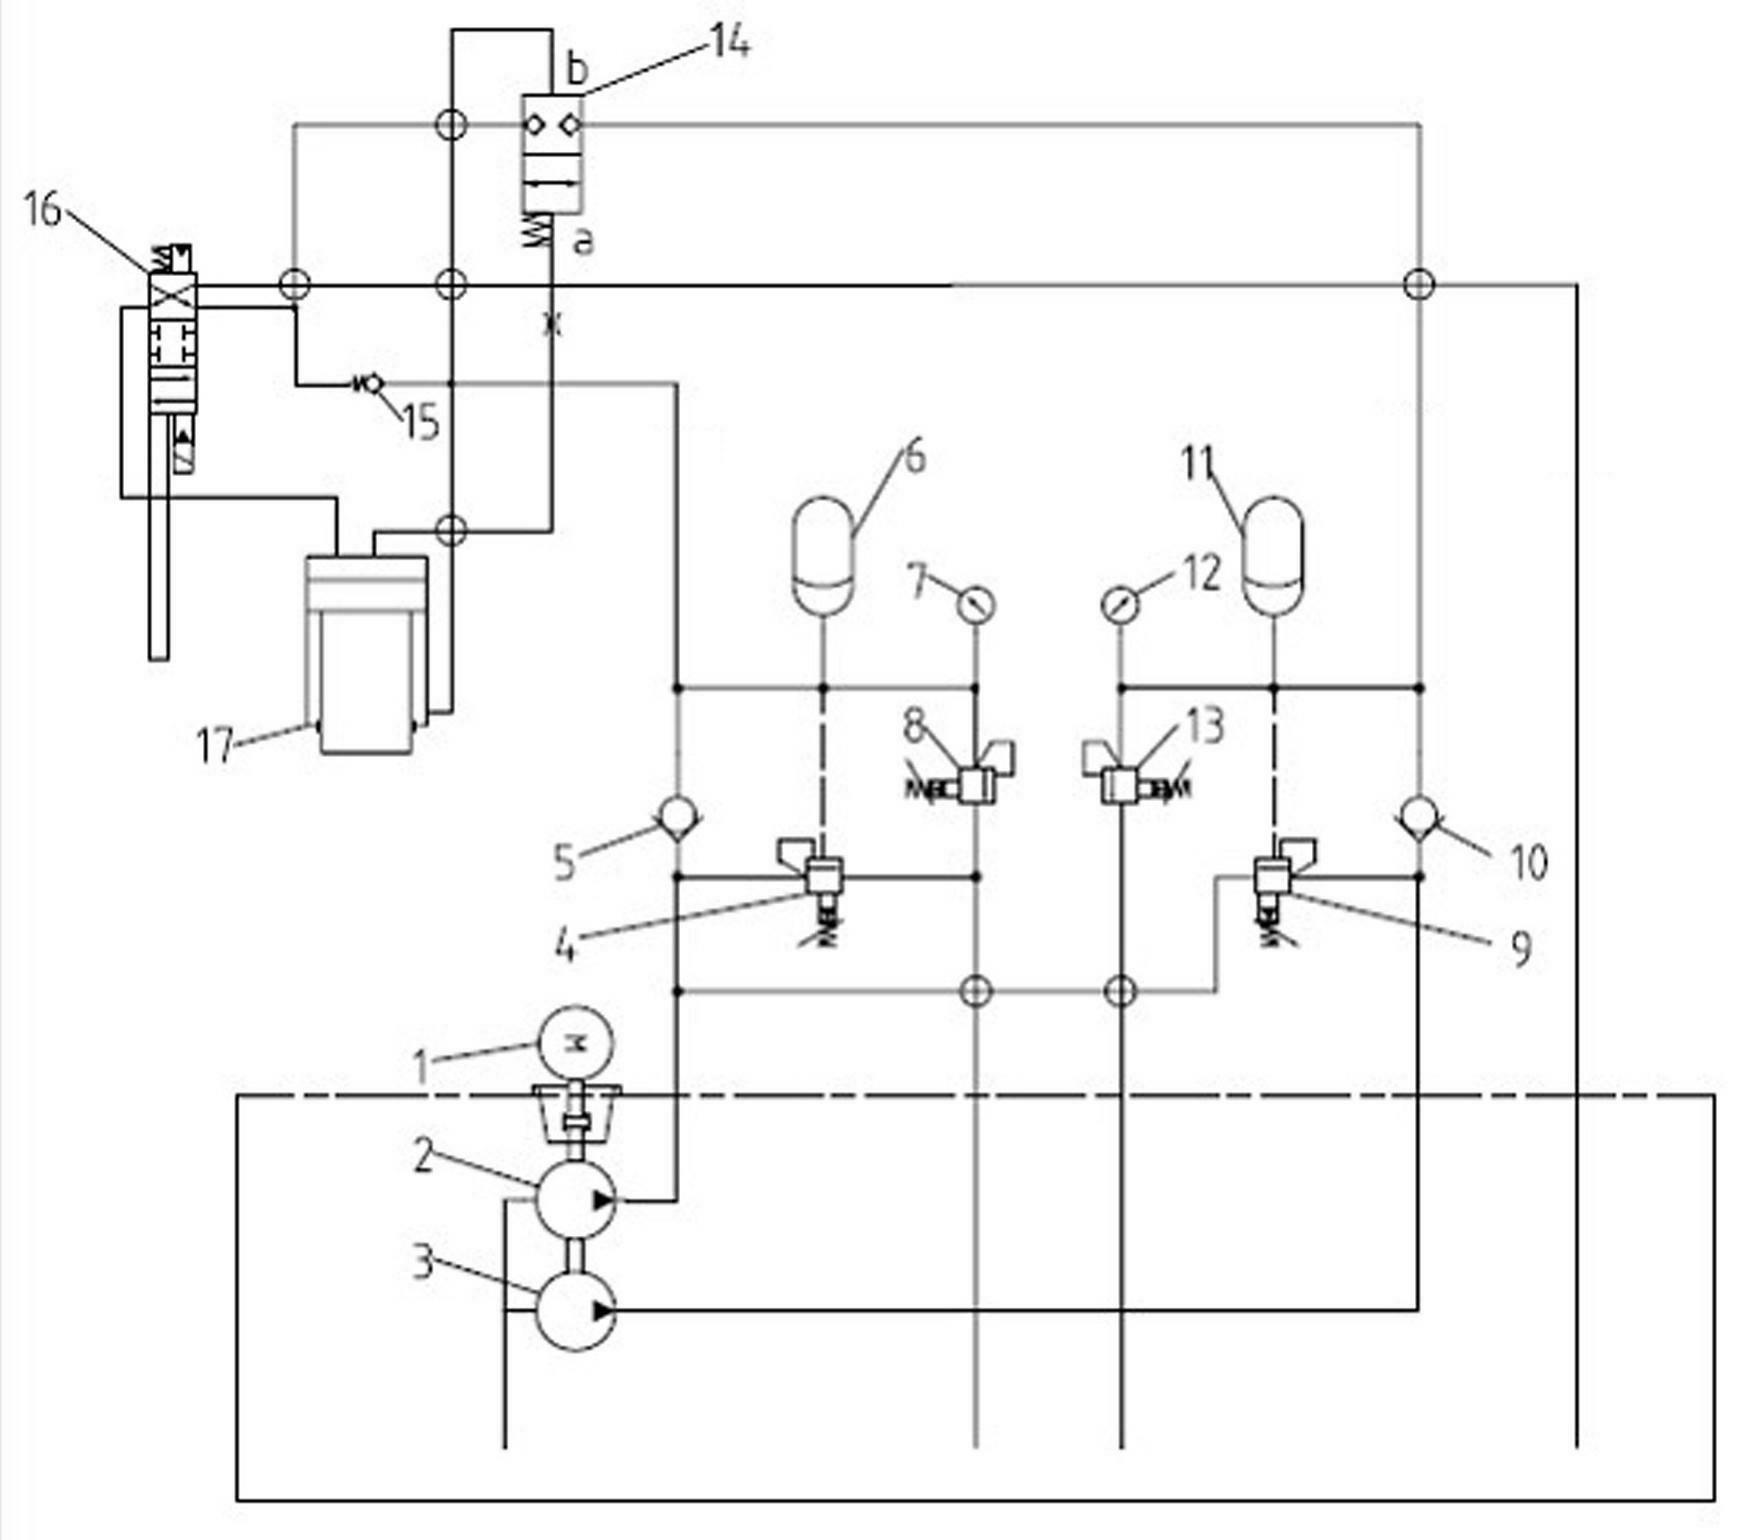 High-speed punching hydraulic circuit of hydraulic punching machine